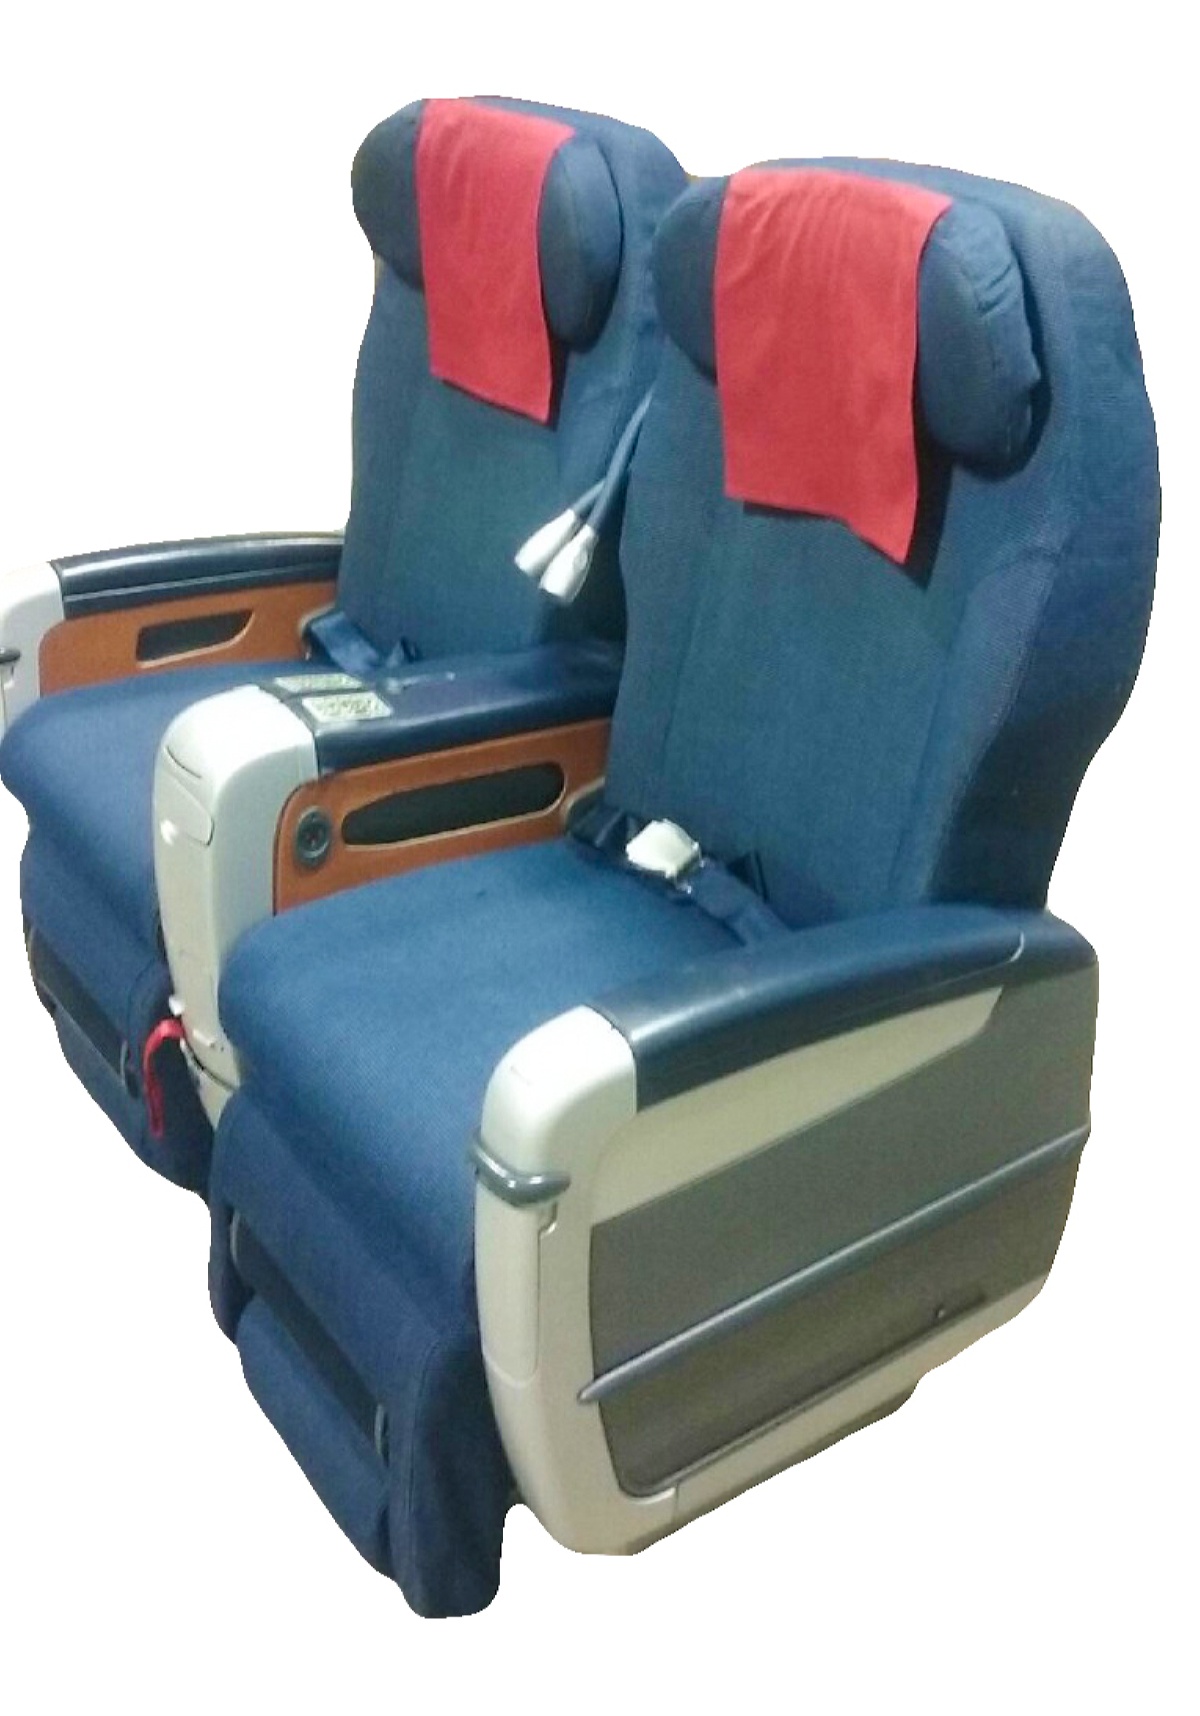 SAS A340 Navy Blue   Red Headrest Cover Business Class Seats